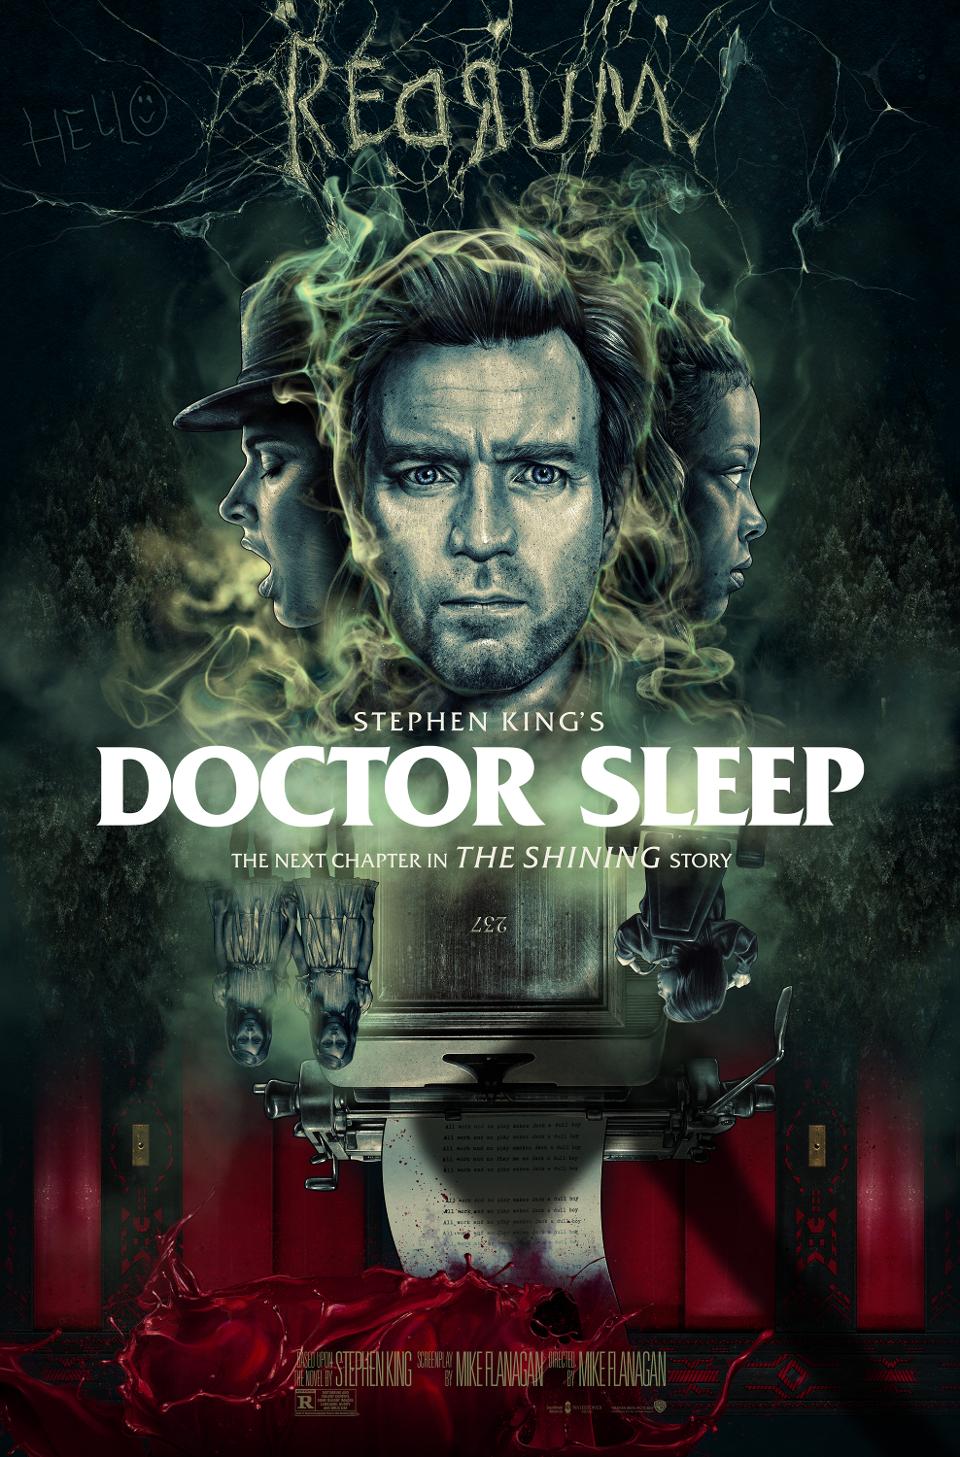 Doctor Sleep full movie download | Download in English , Hindi 480p/720p